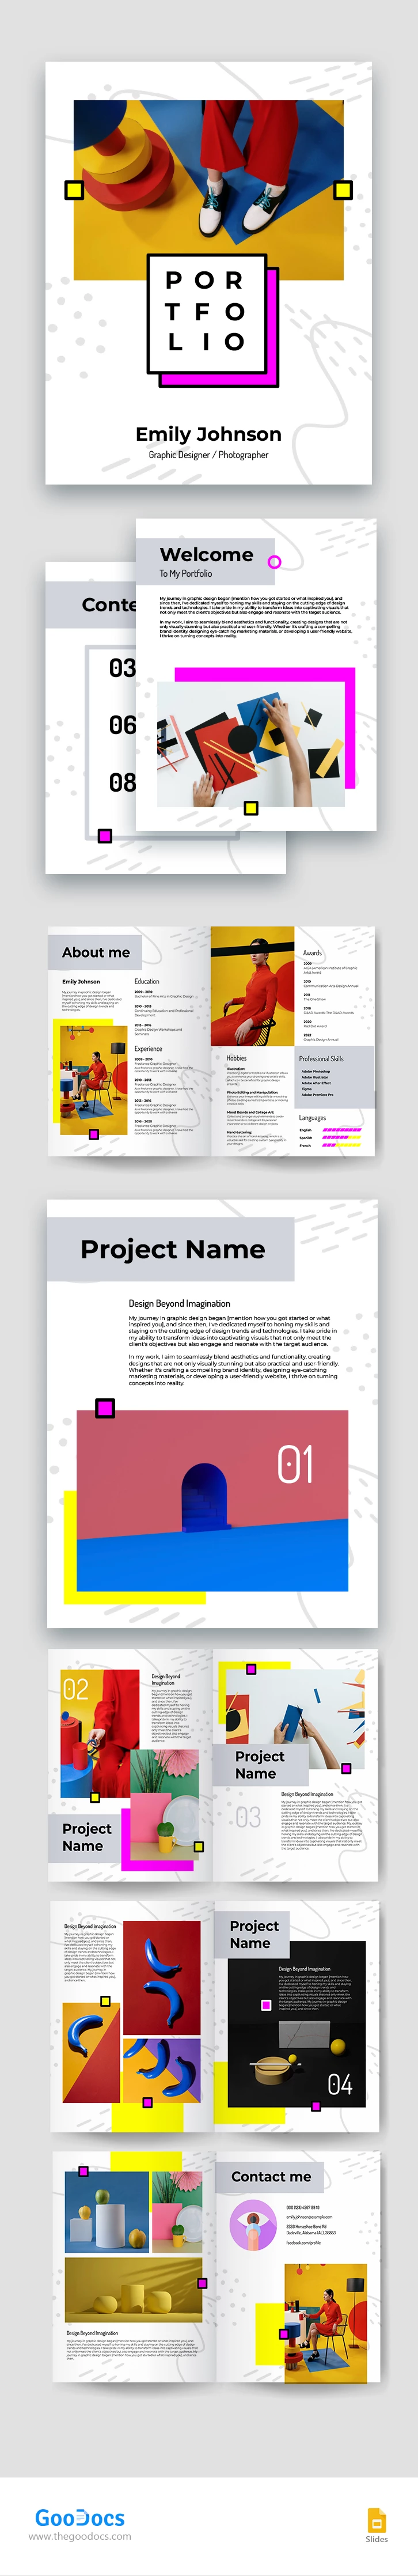 Portfolio del designer creativo - free Google Docs Template - 10067394